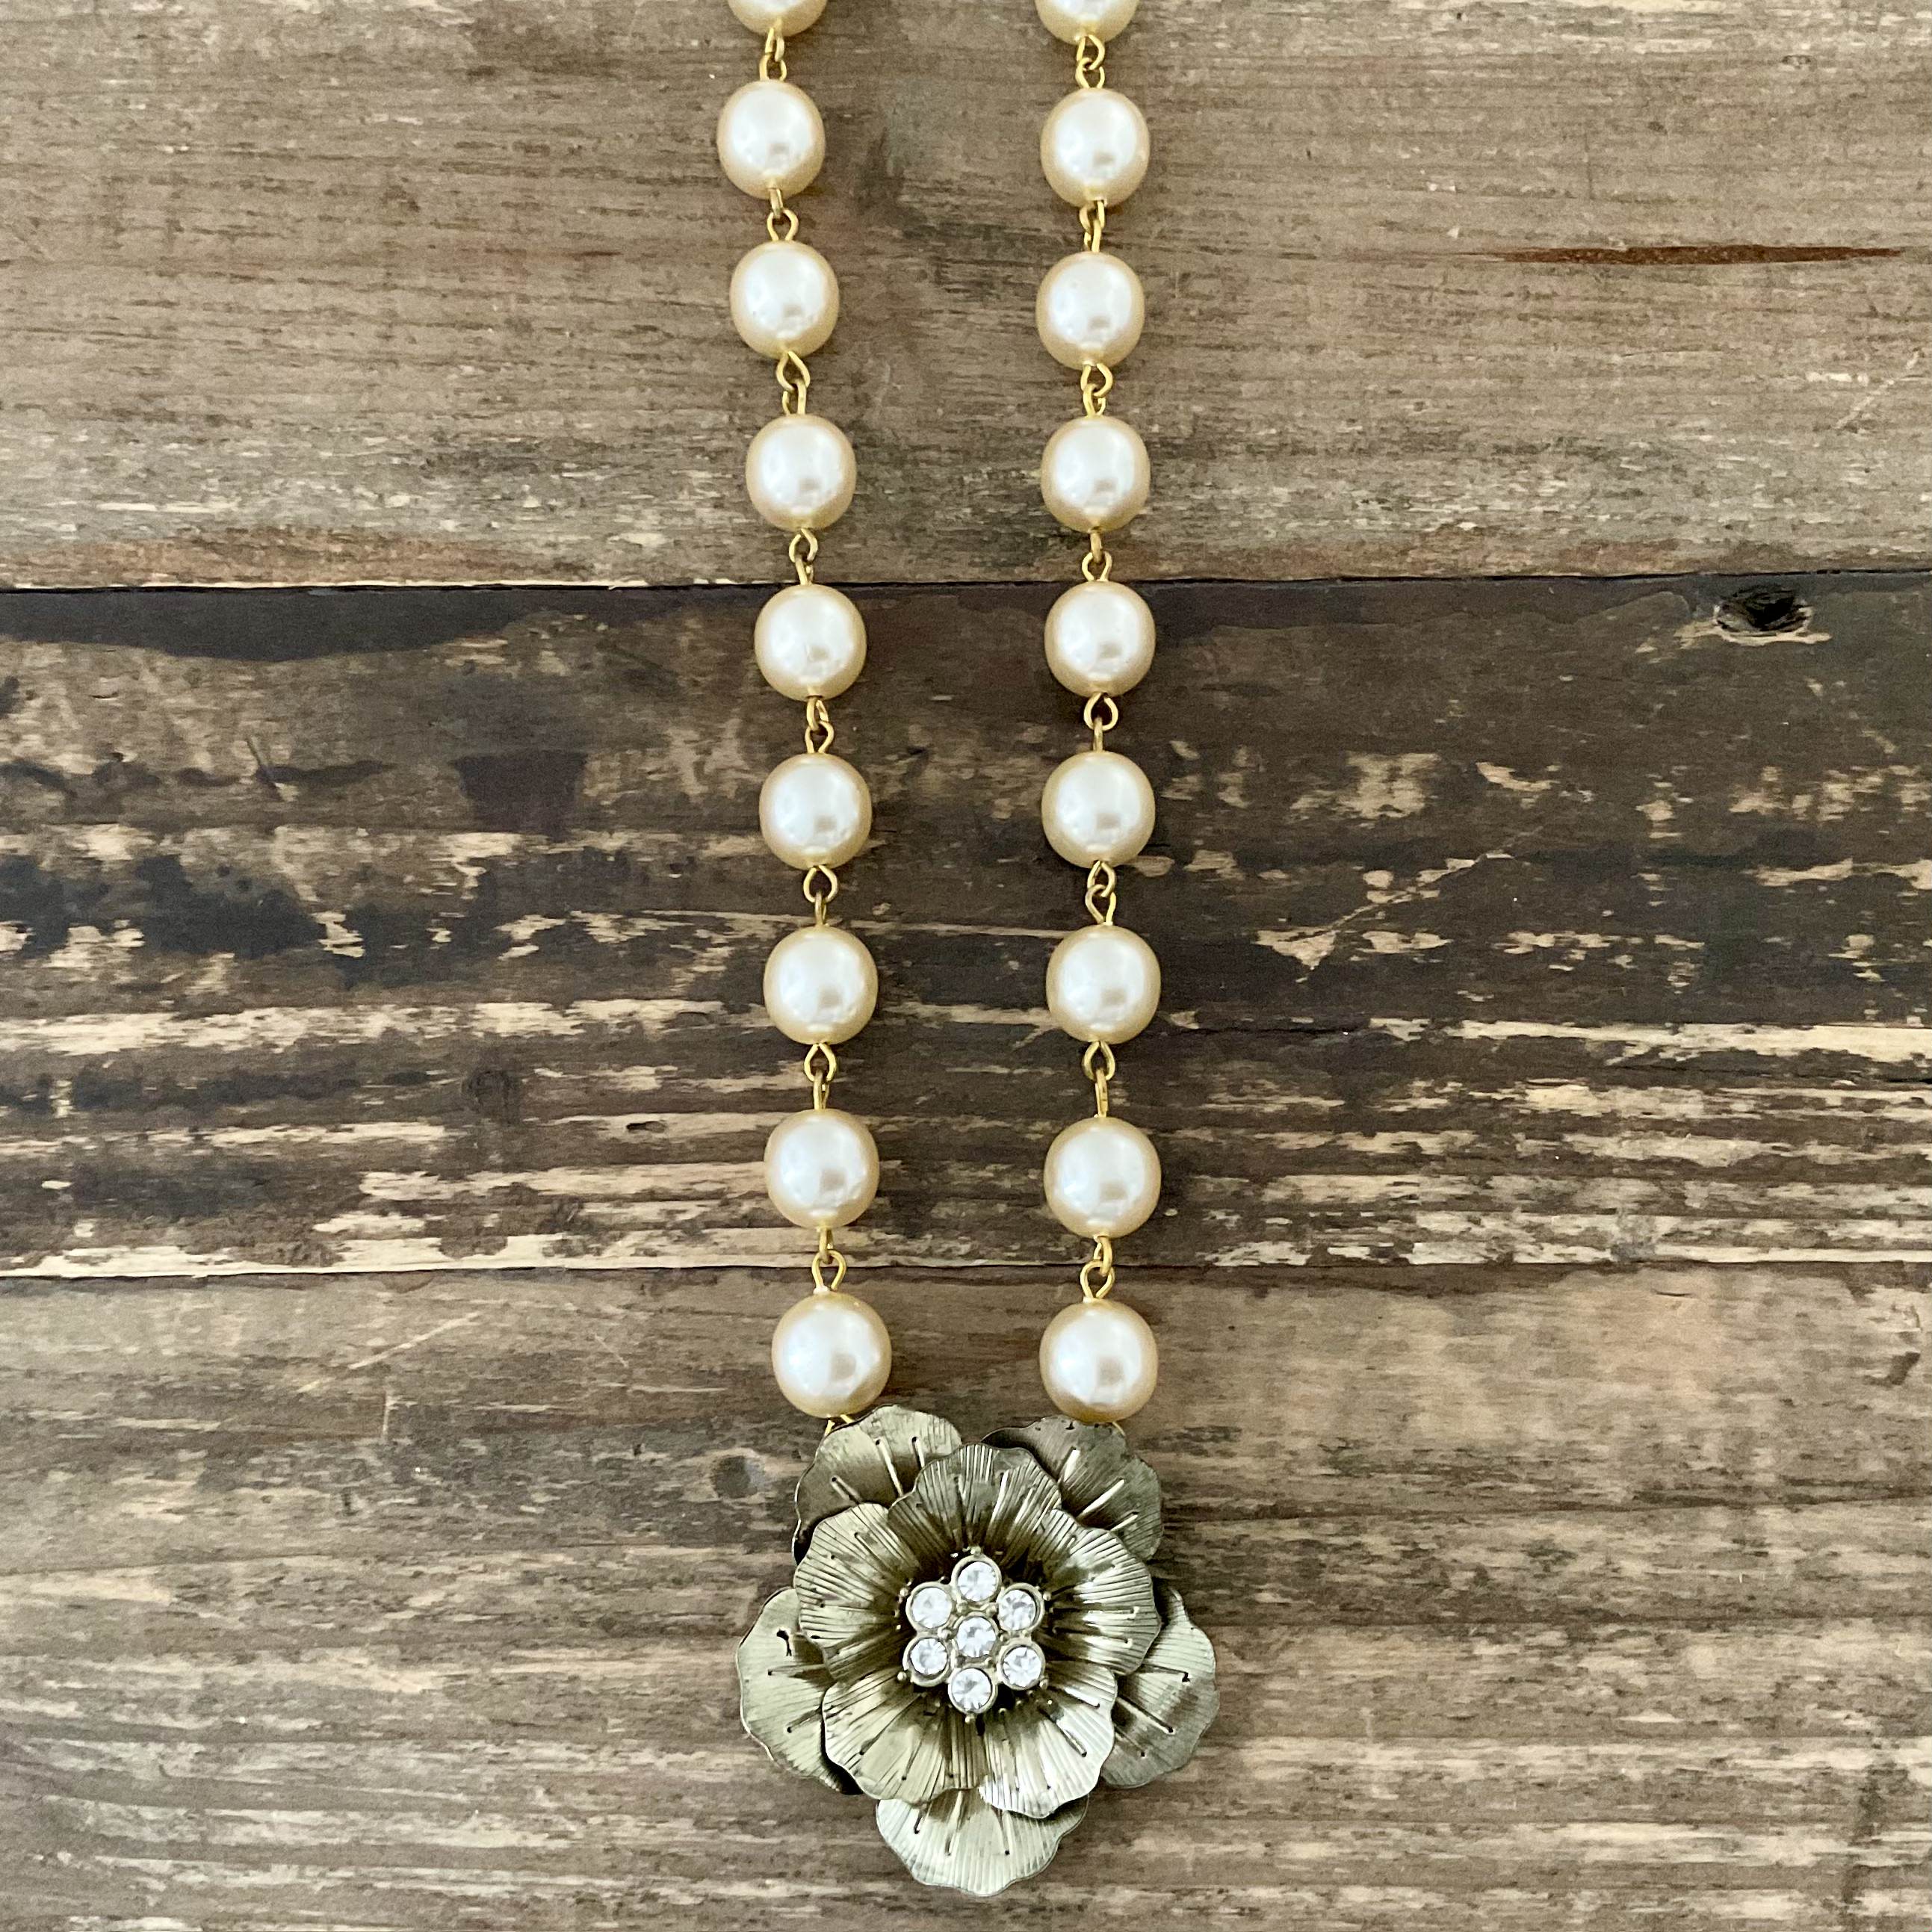 Vintage Gold Flower & Pearl Necklace